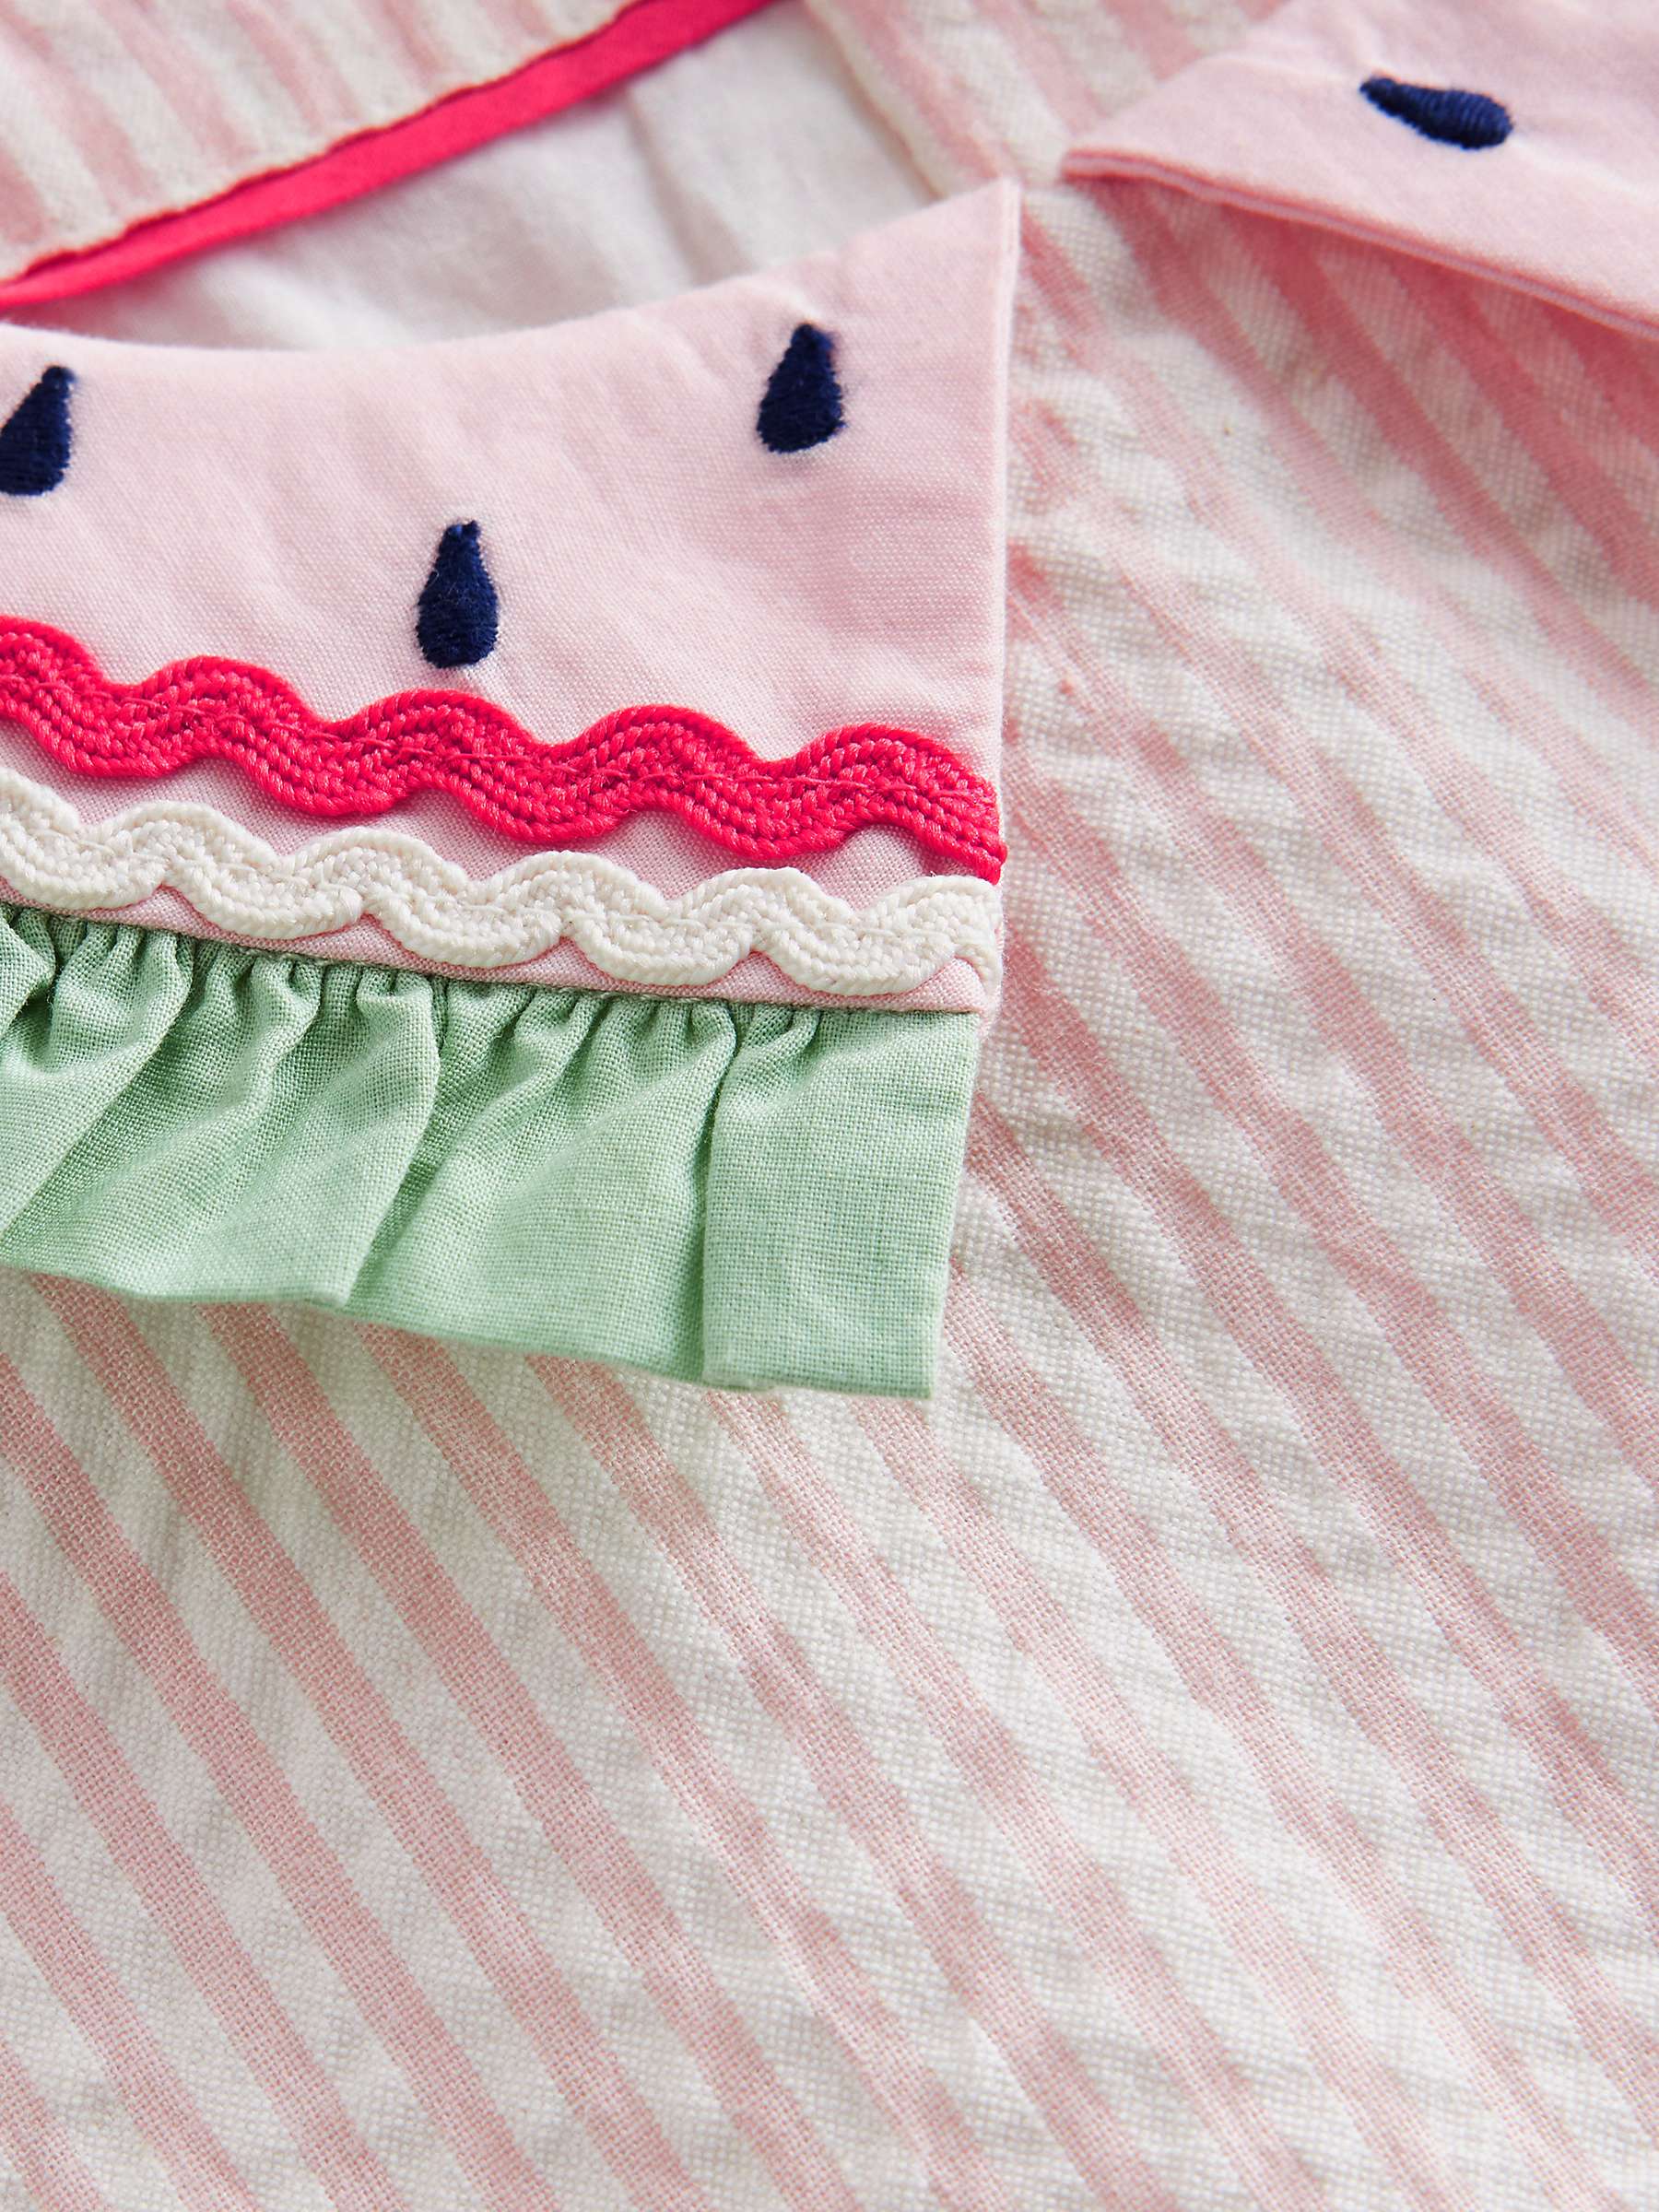 Buy Mini Boden Kids' Watermelon Collar Seersucker Dress, Pink/Ivory Stripe Online at johnlewis.com